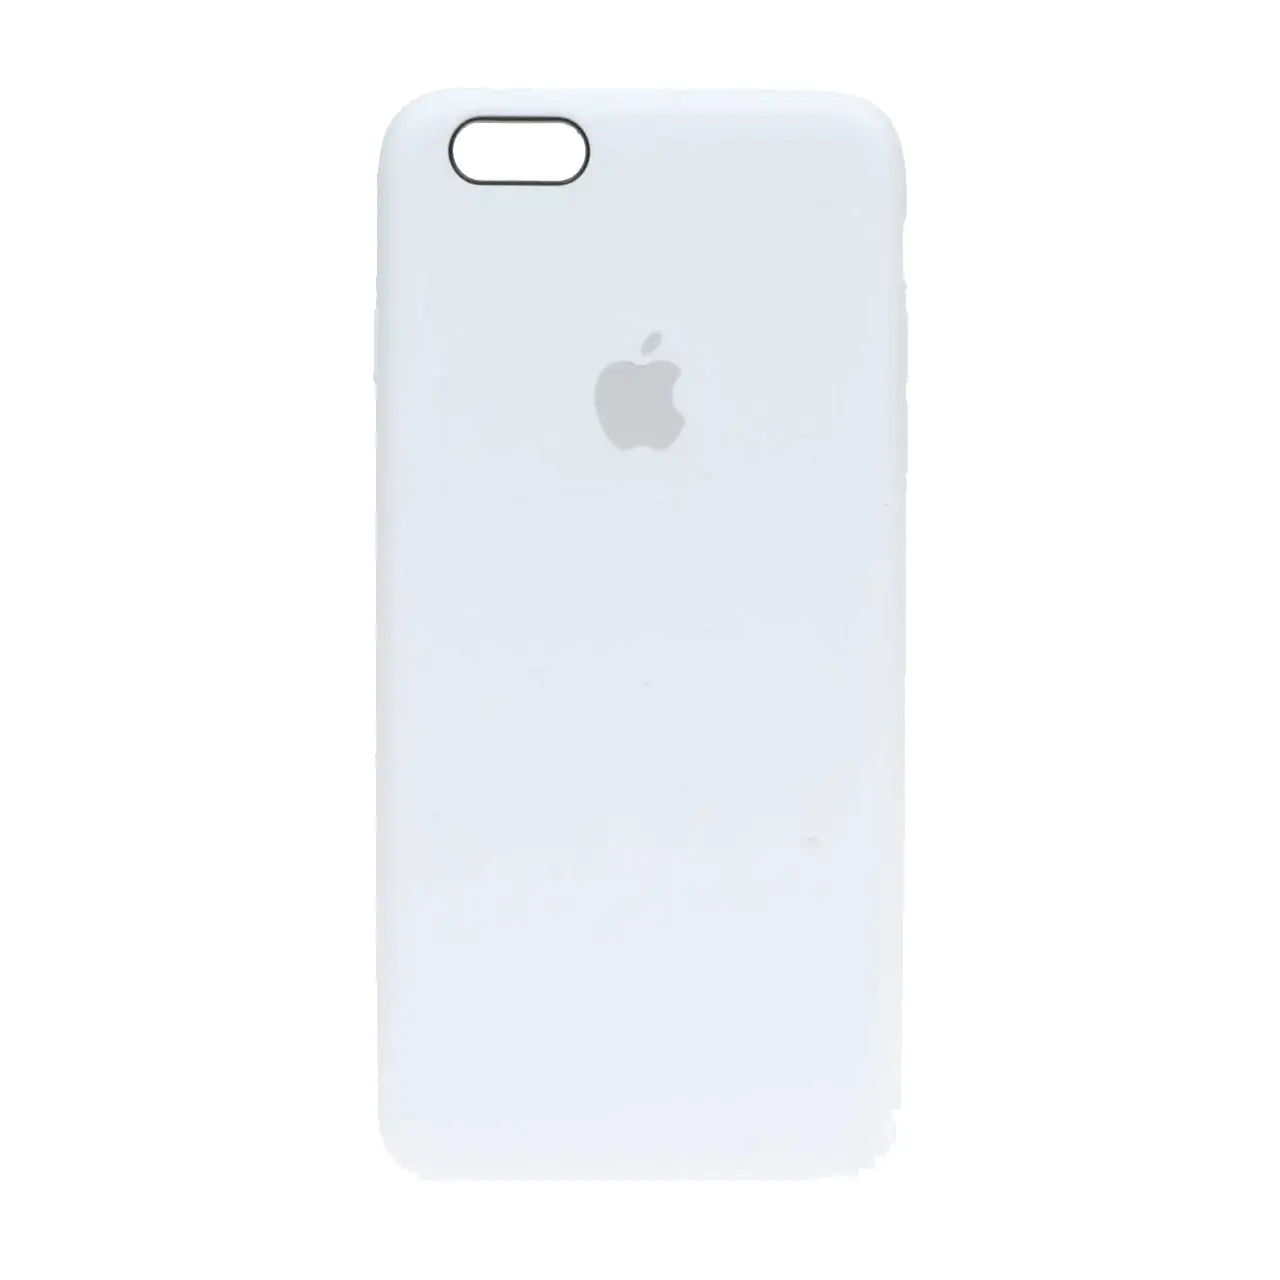 کاور سیلیکونی اورجینال  iphone 6 / 6s – سفید